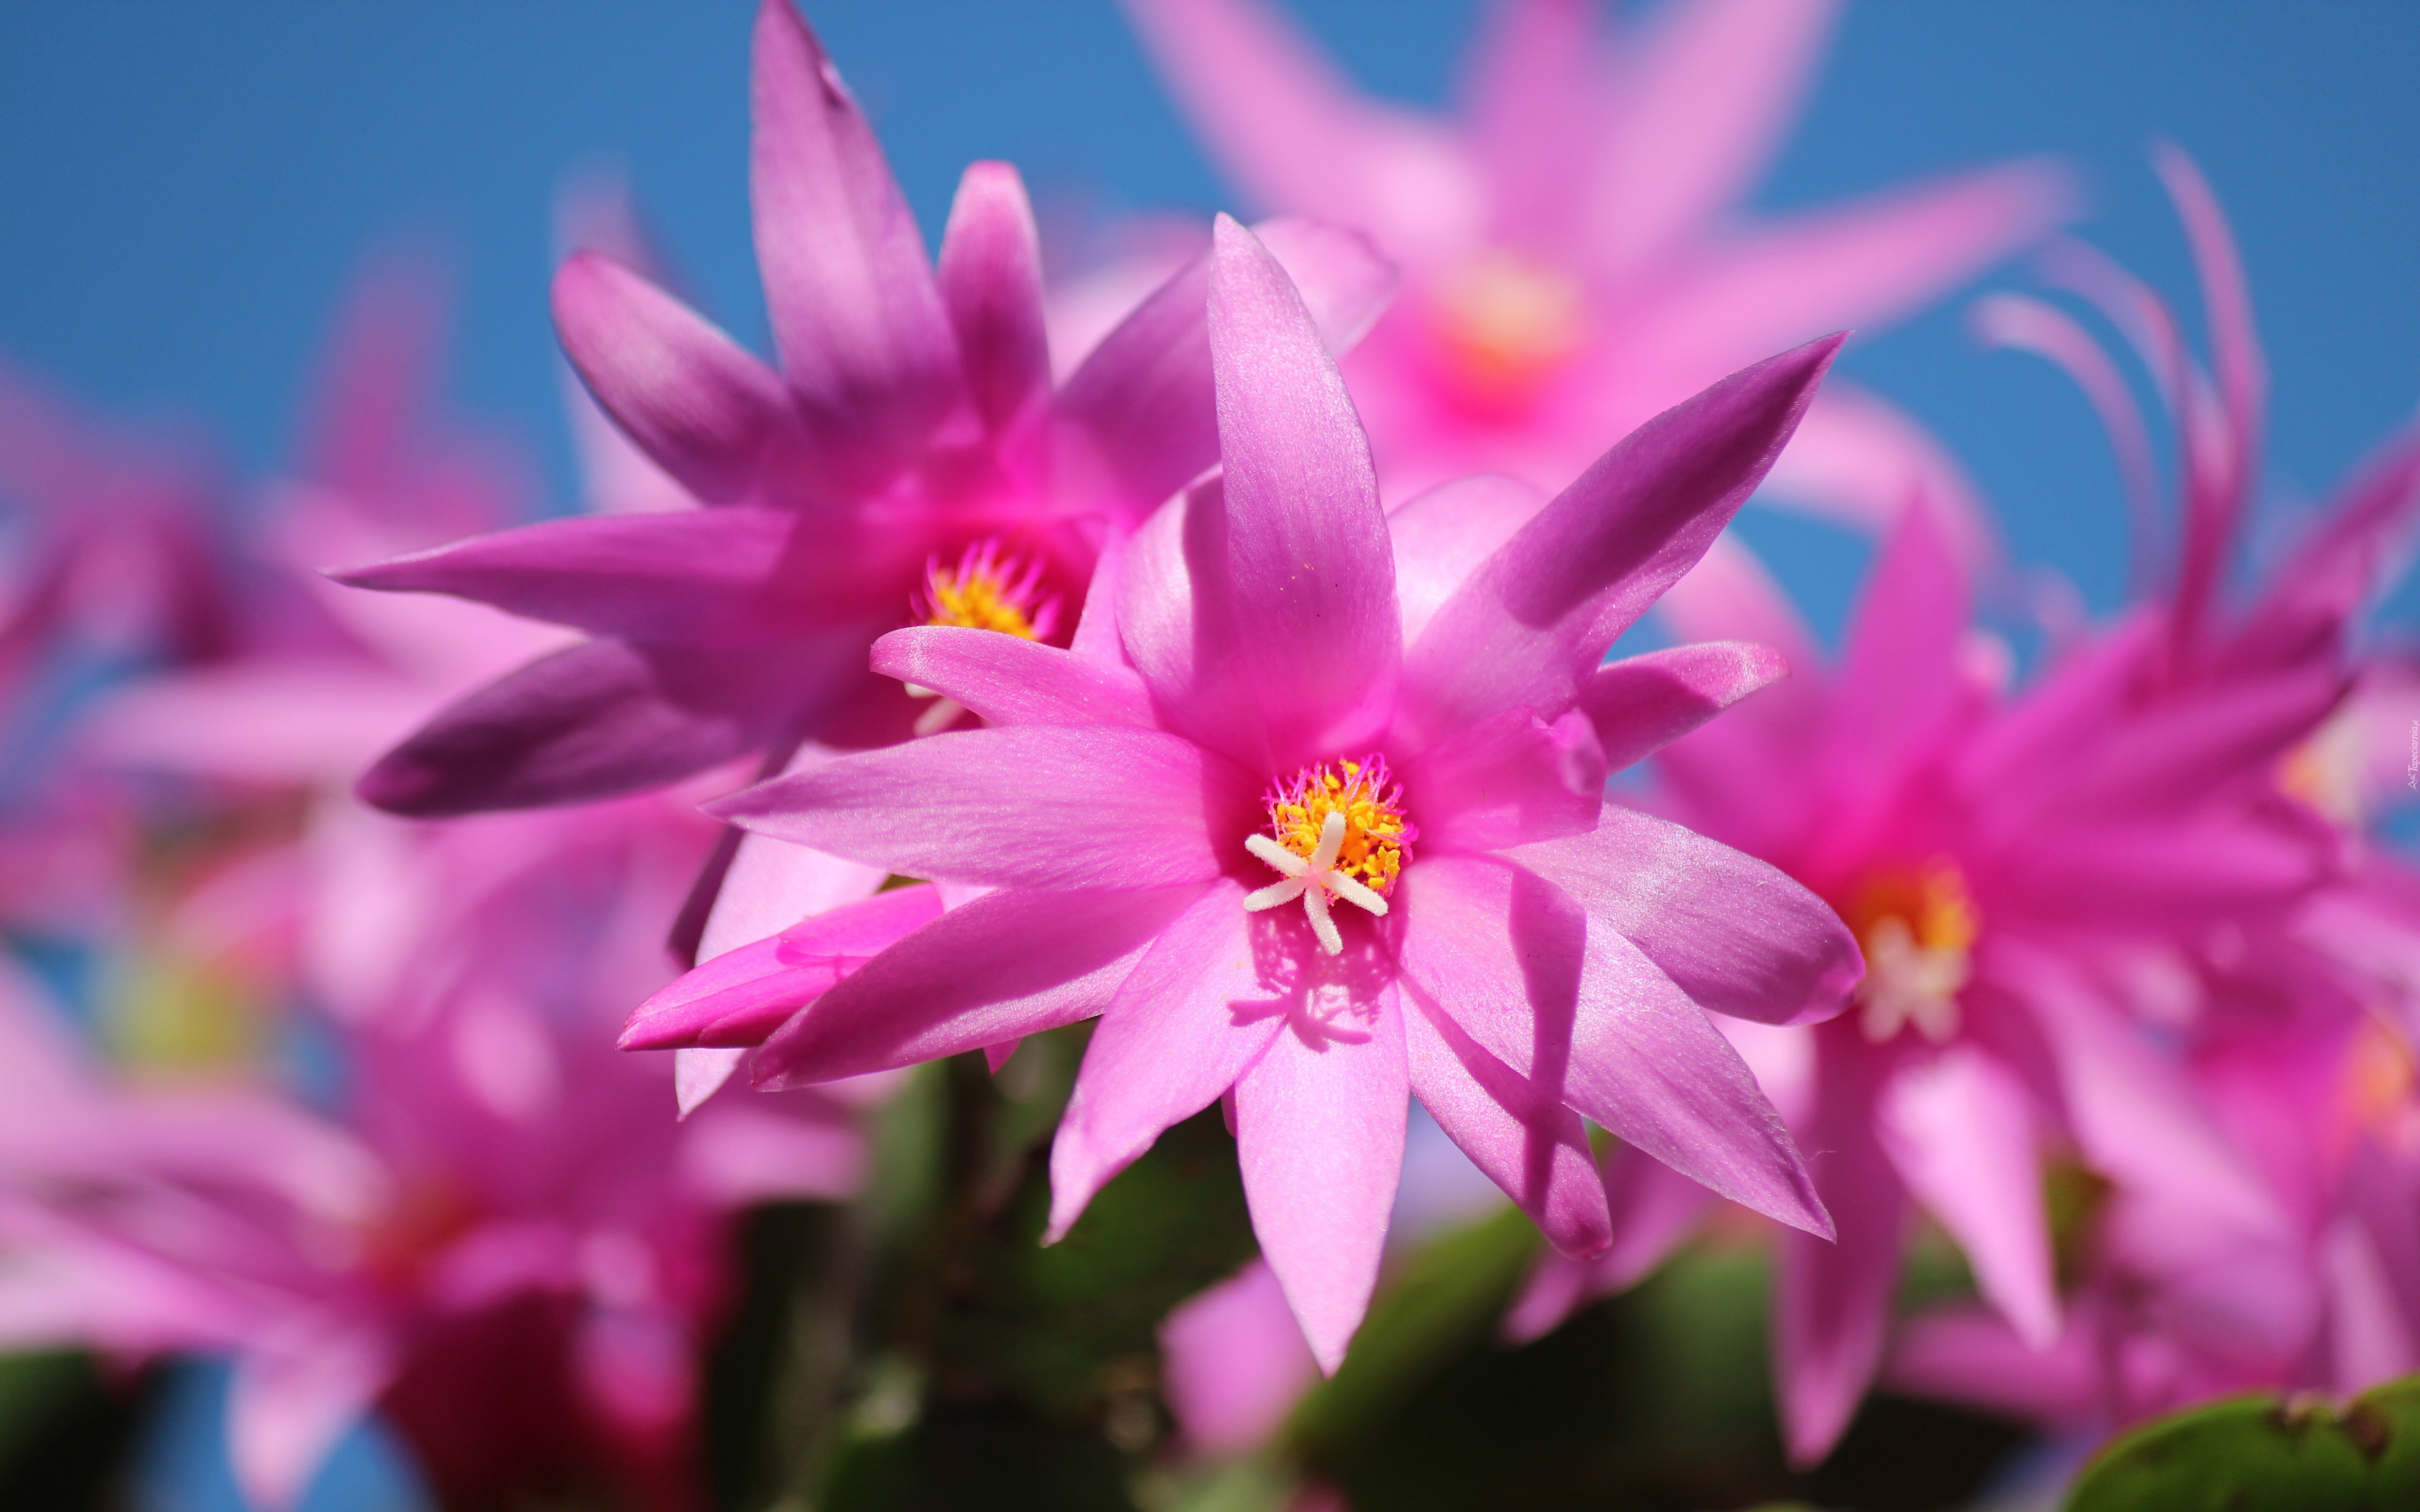 Plants Christmas Cactus Pink Flower Blossoms Vibrant Flowers Desktop Backgrounds Free Download